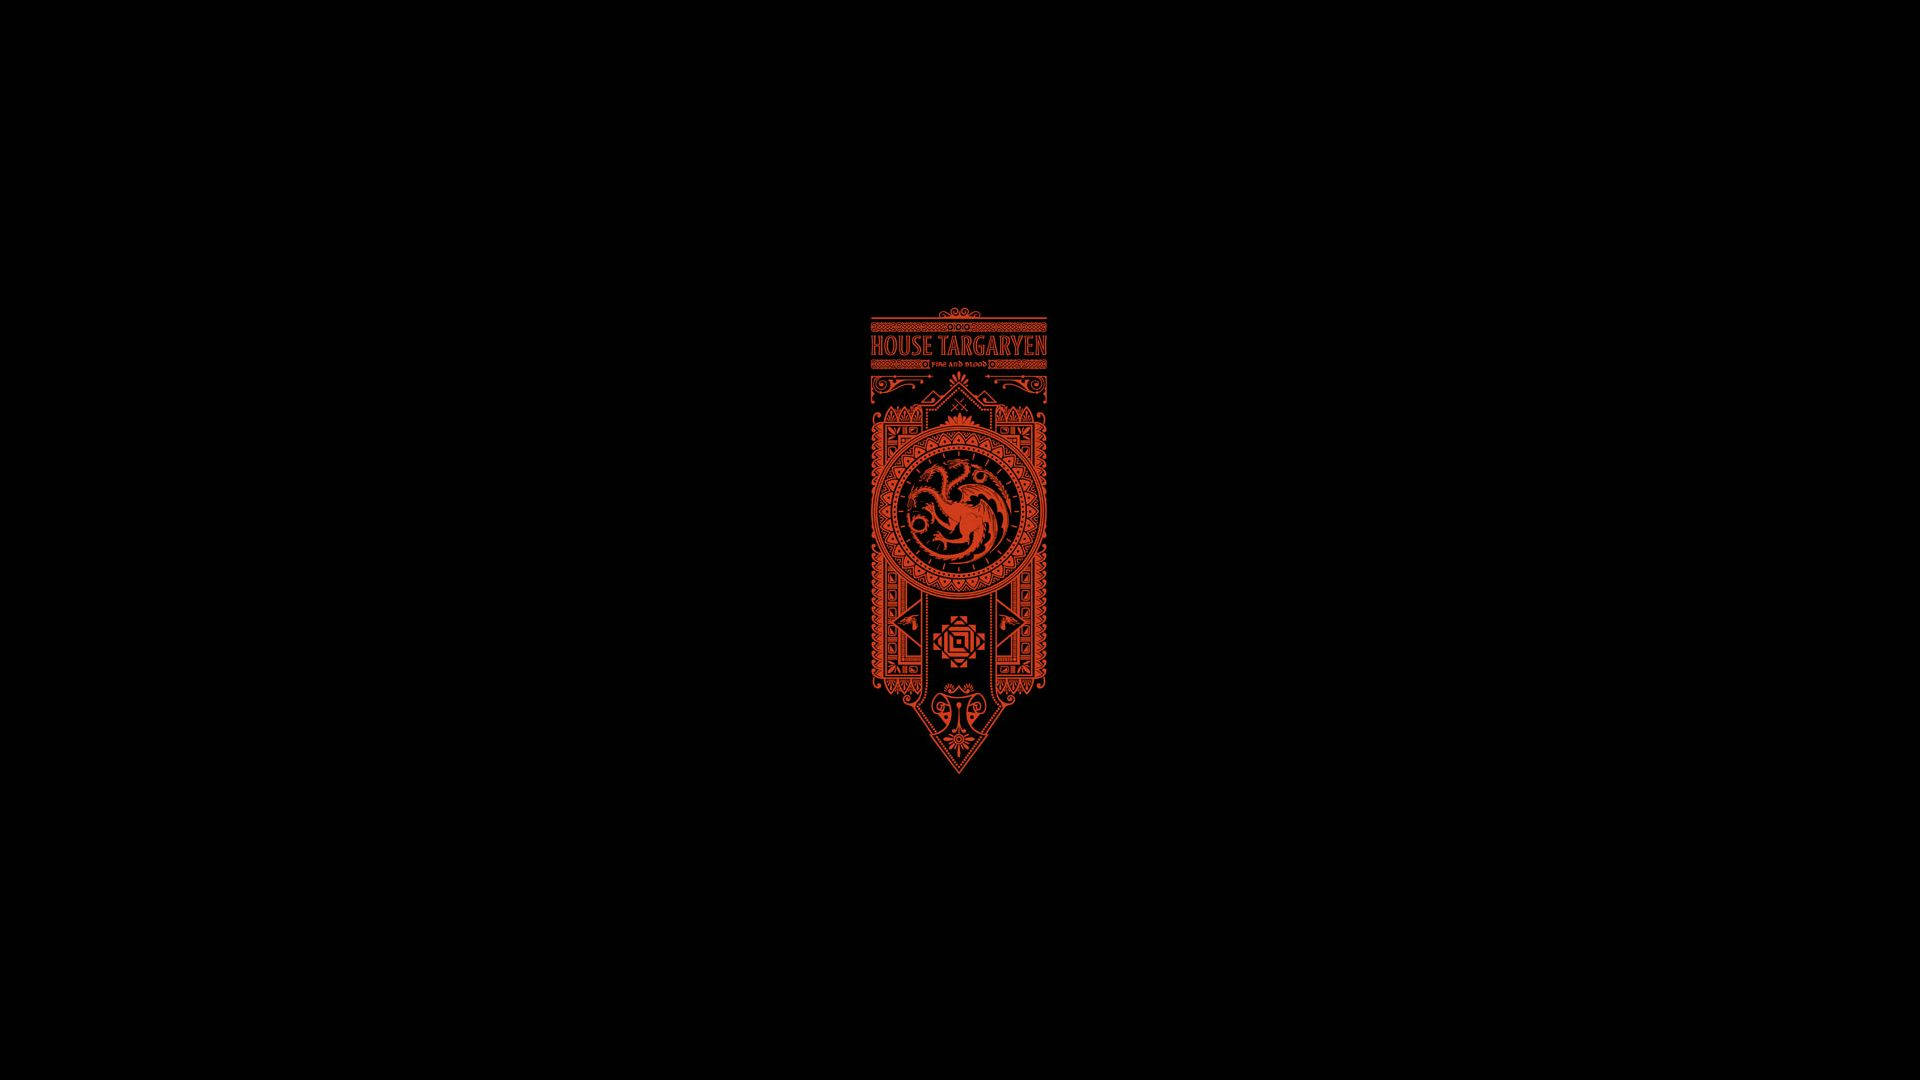 Simple Desktop Game Of Thrones Banner Background